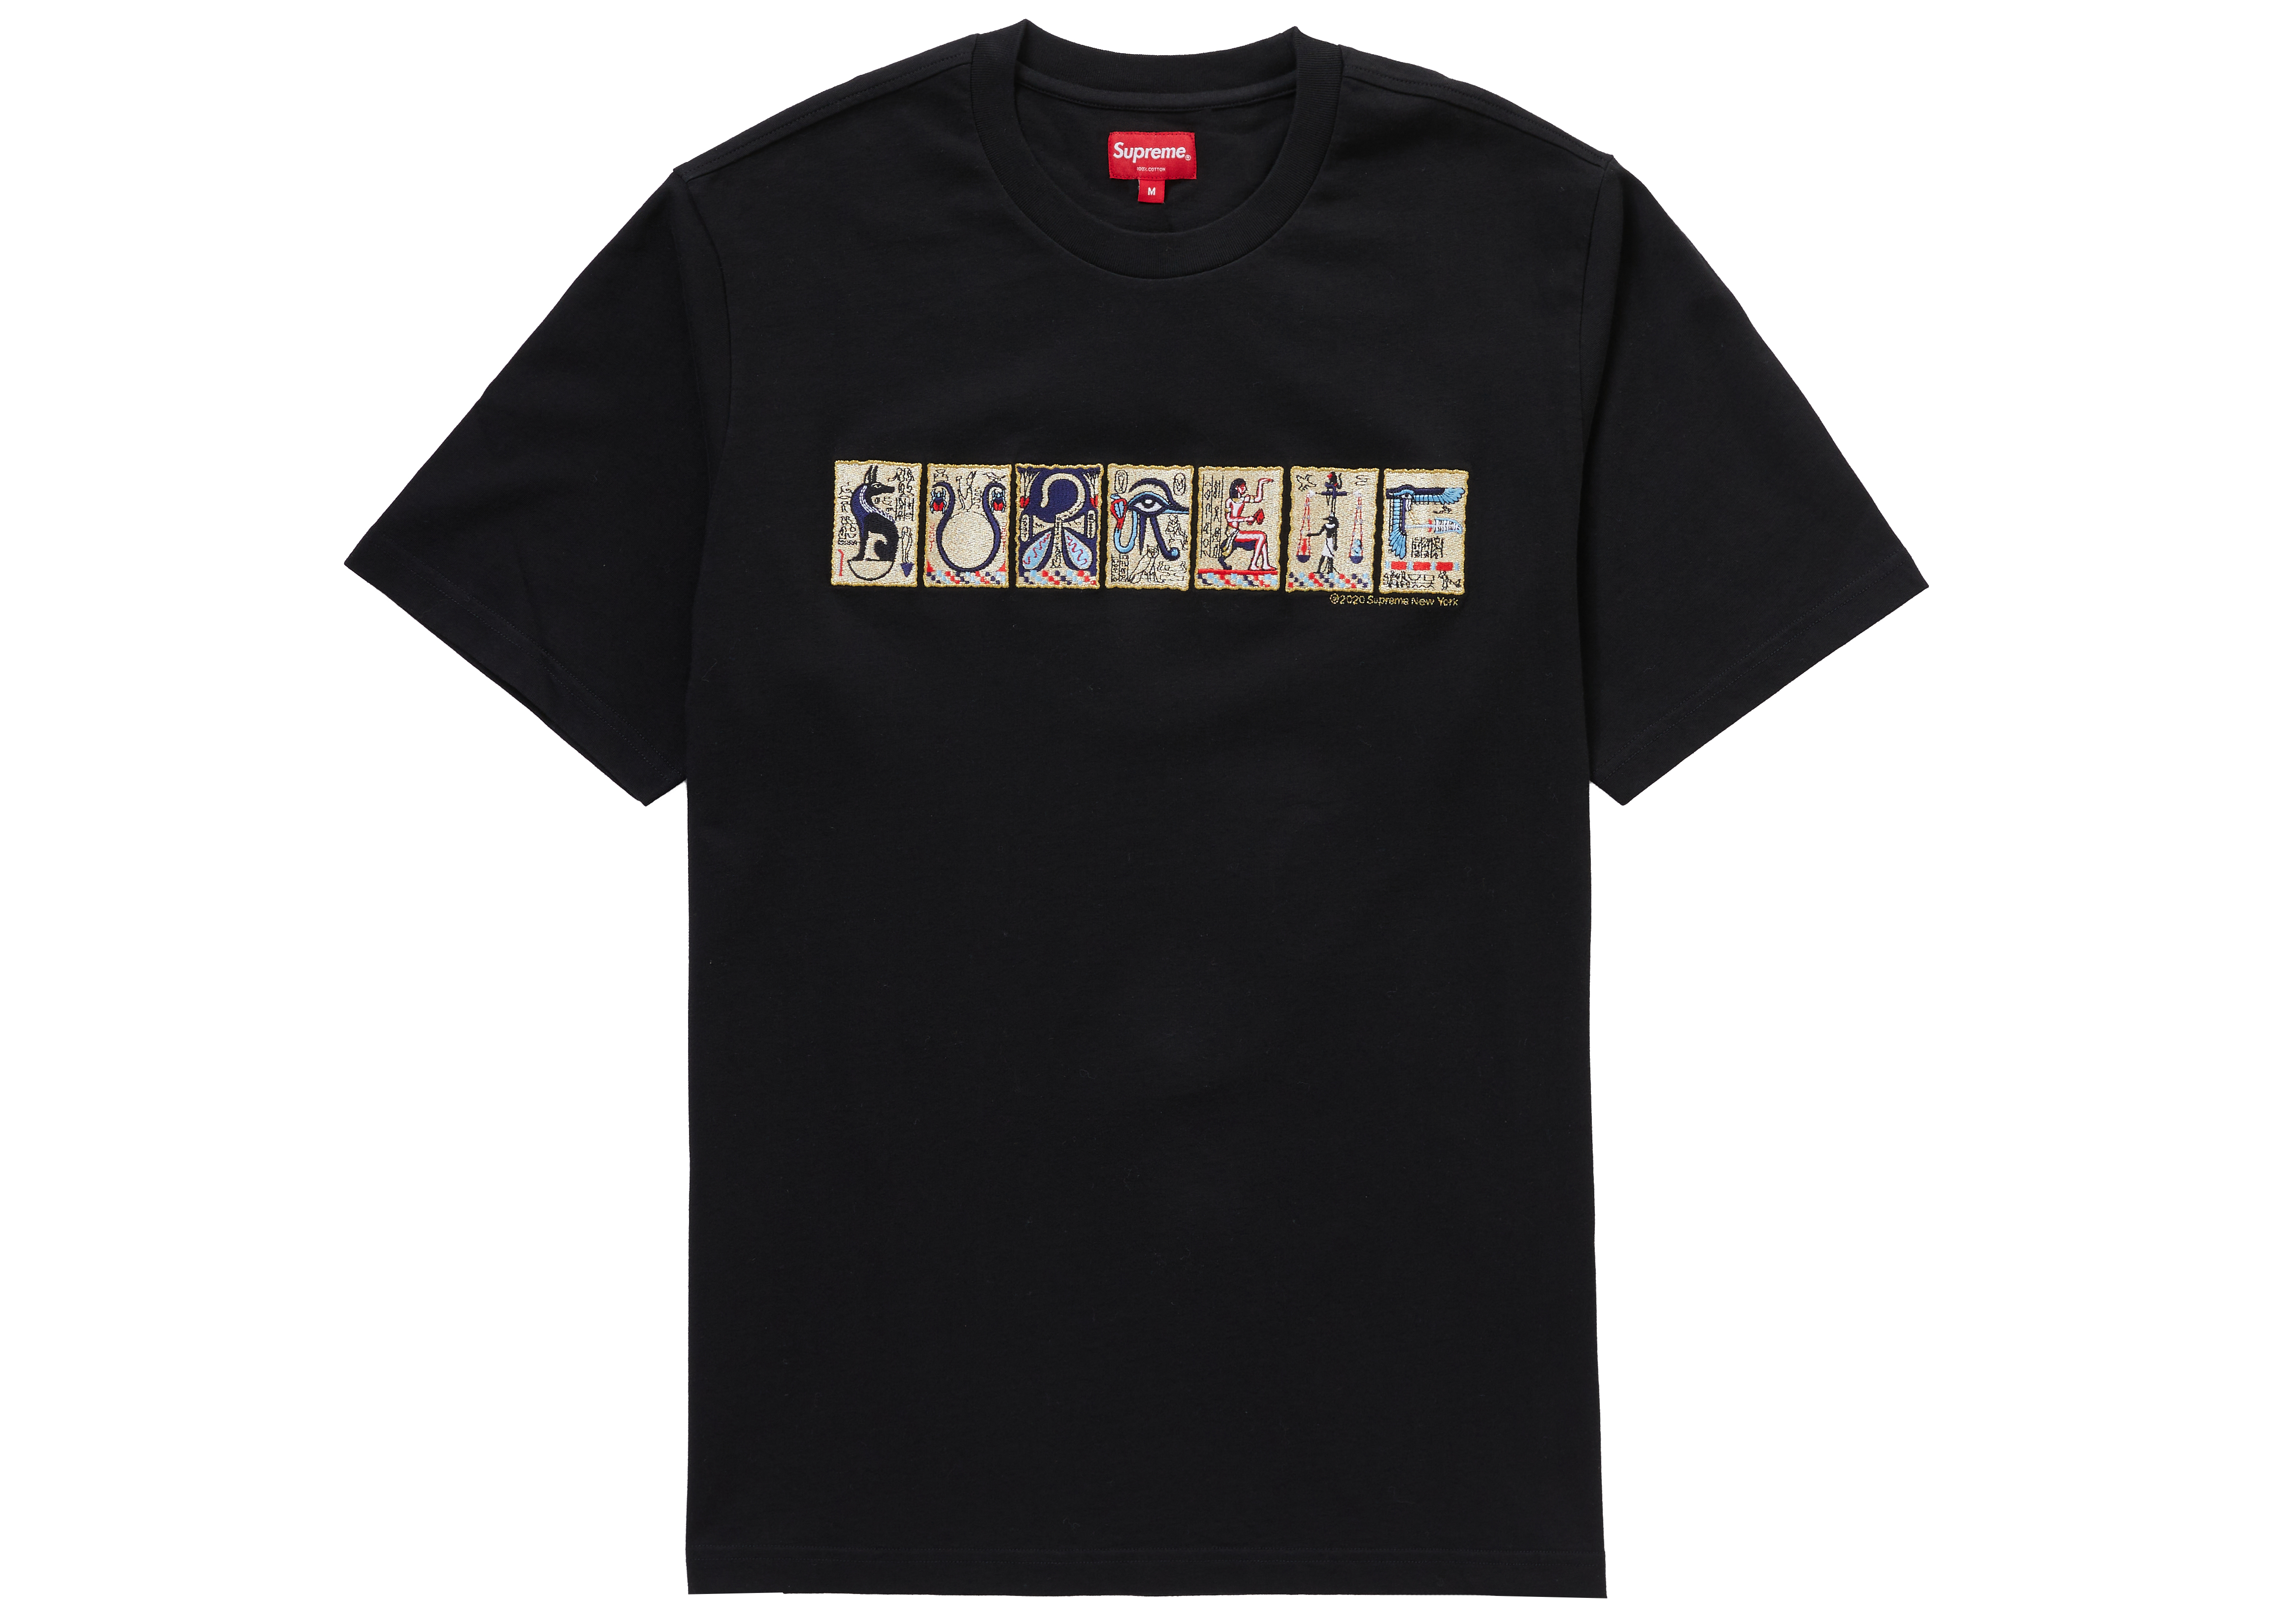 【Lサイズ】Supreme Ancient S/S Top Tシャツ